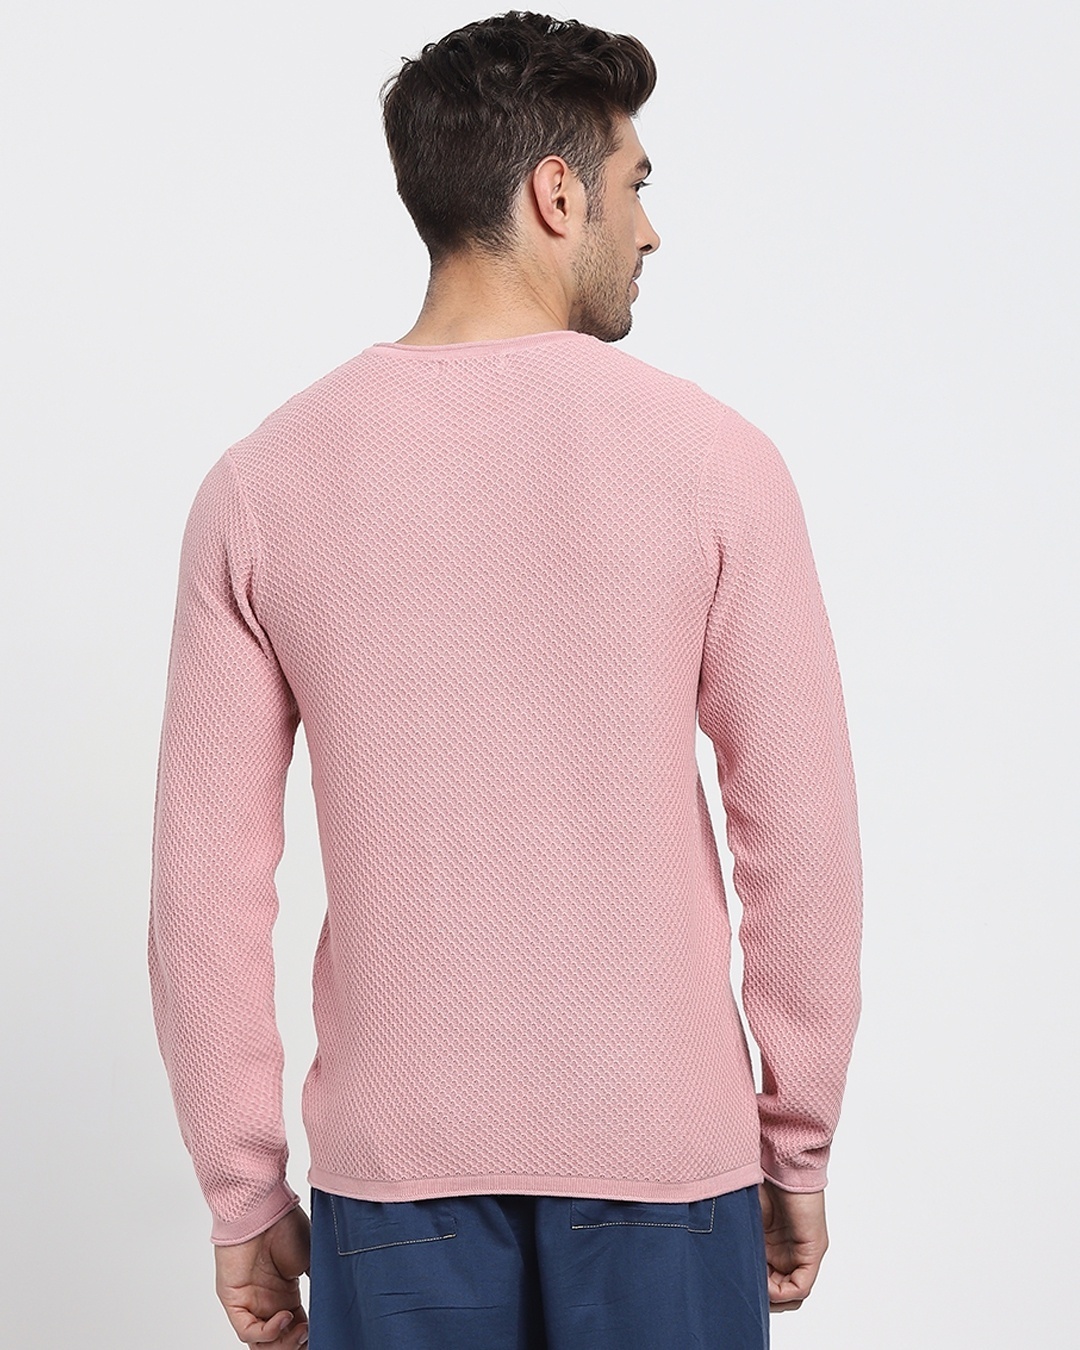 Buy Men's Pink Flat Knit Sweater Online at Bewakoof